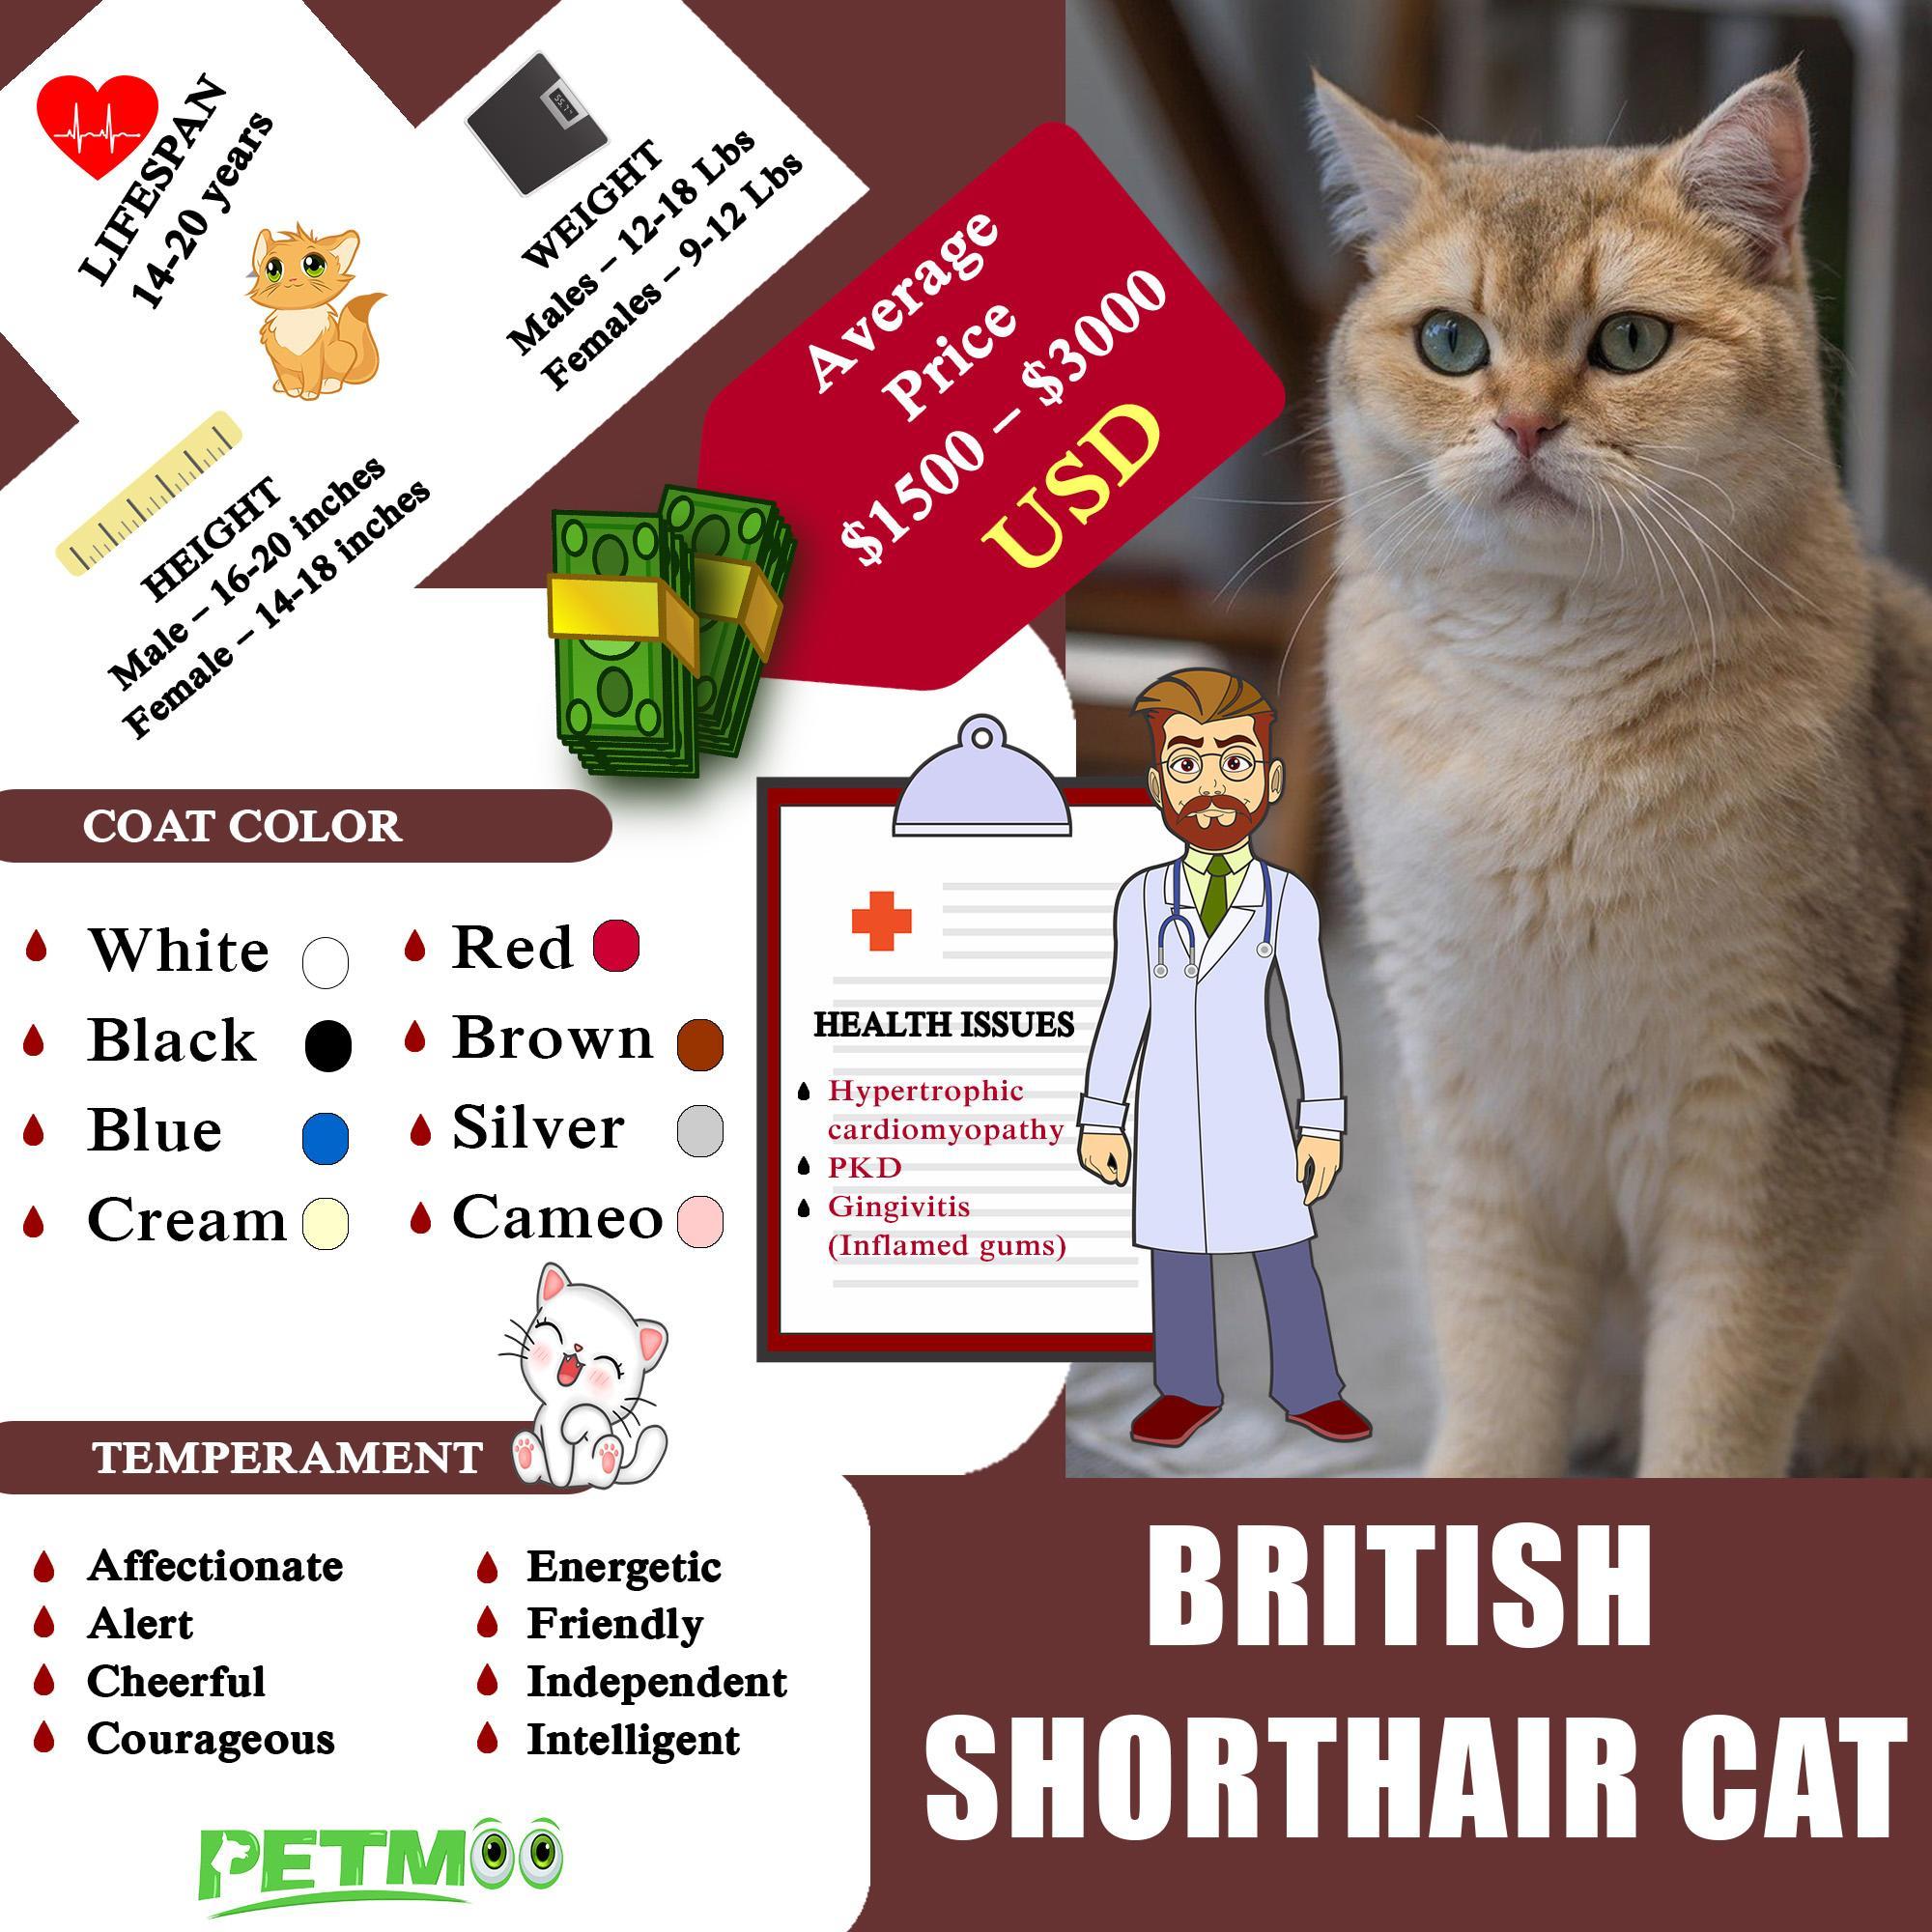 British Shorthair Cat Infographic